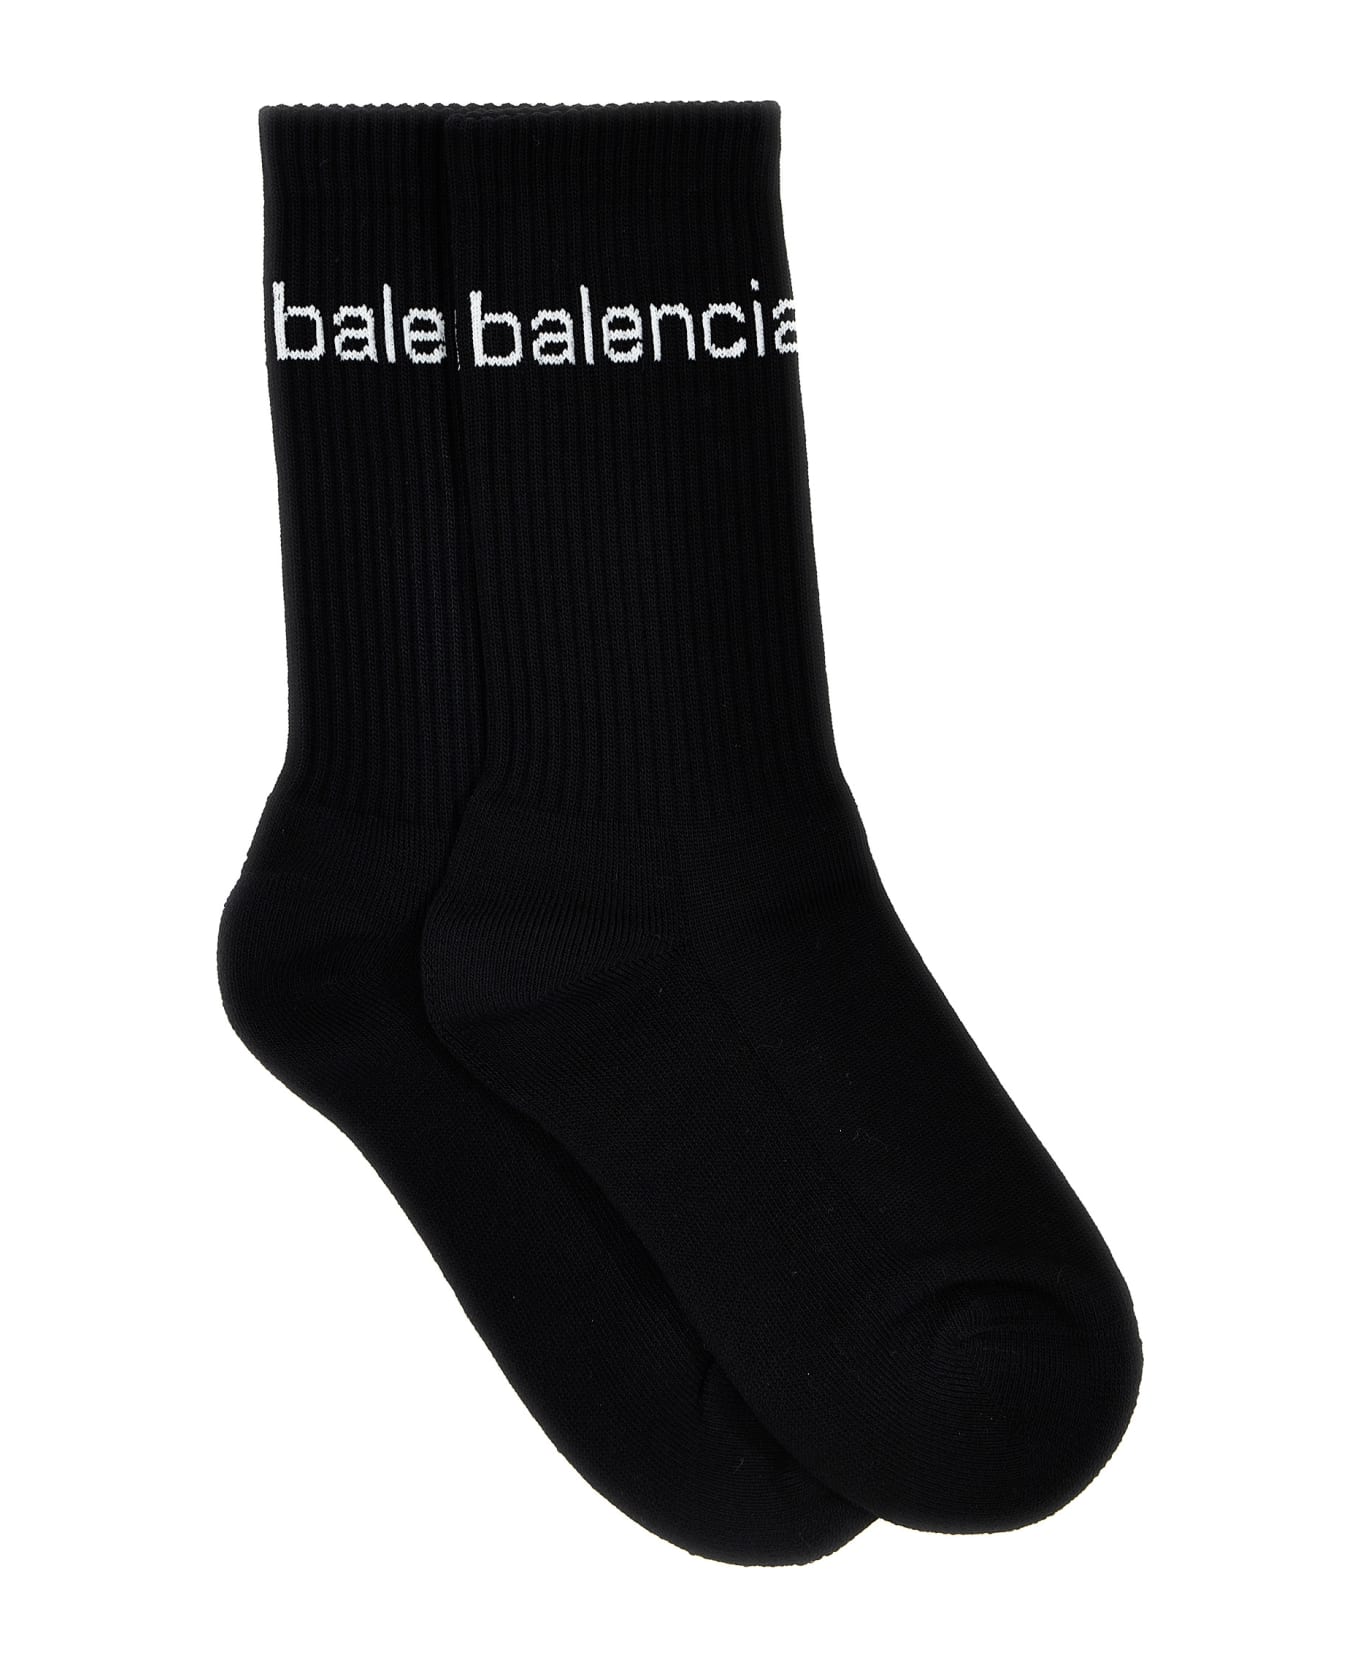 Balenciaga .com Socks - Black 靴下＆タイツ